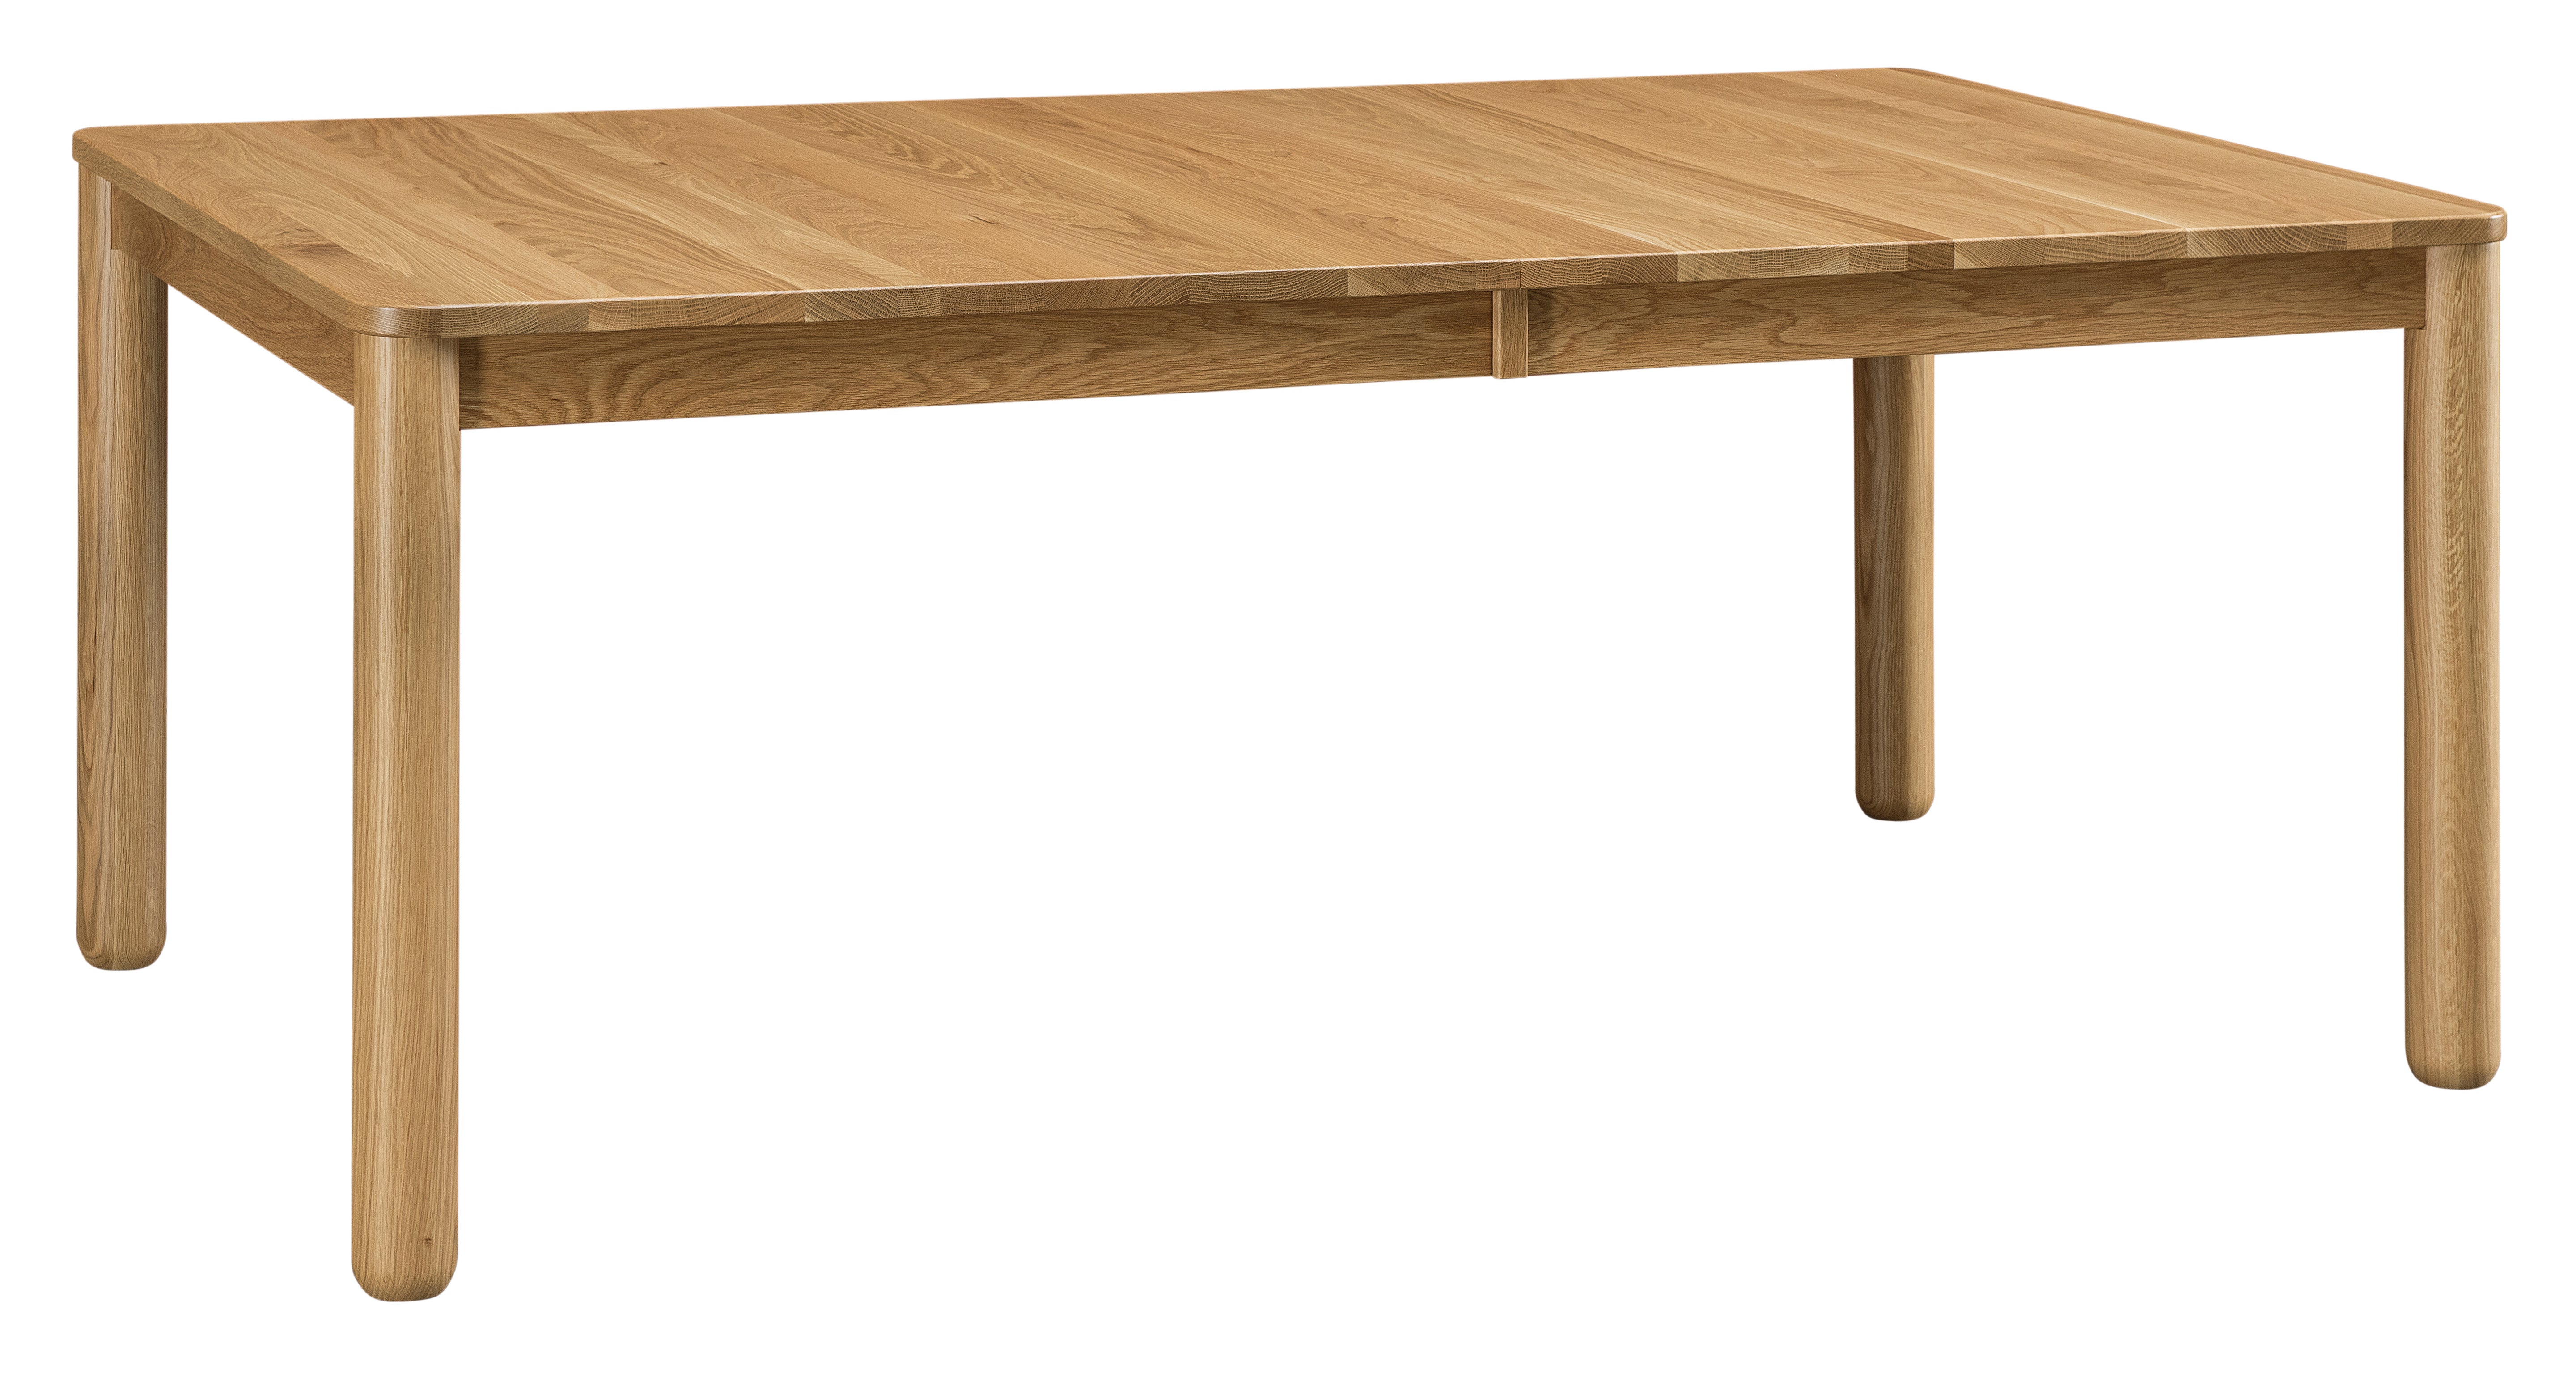 ellianna leg table shown in plain sawn white oak with a natural 10 sheen finish